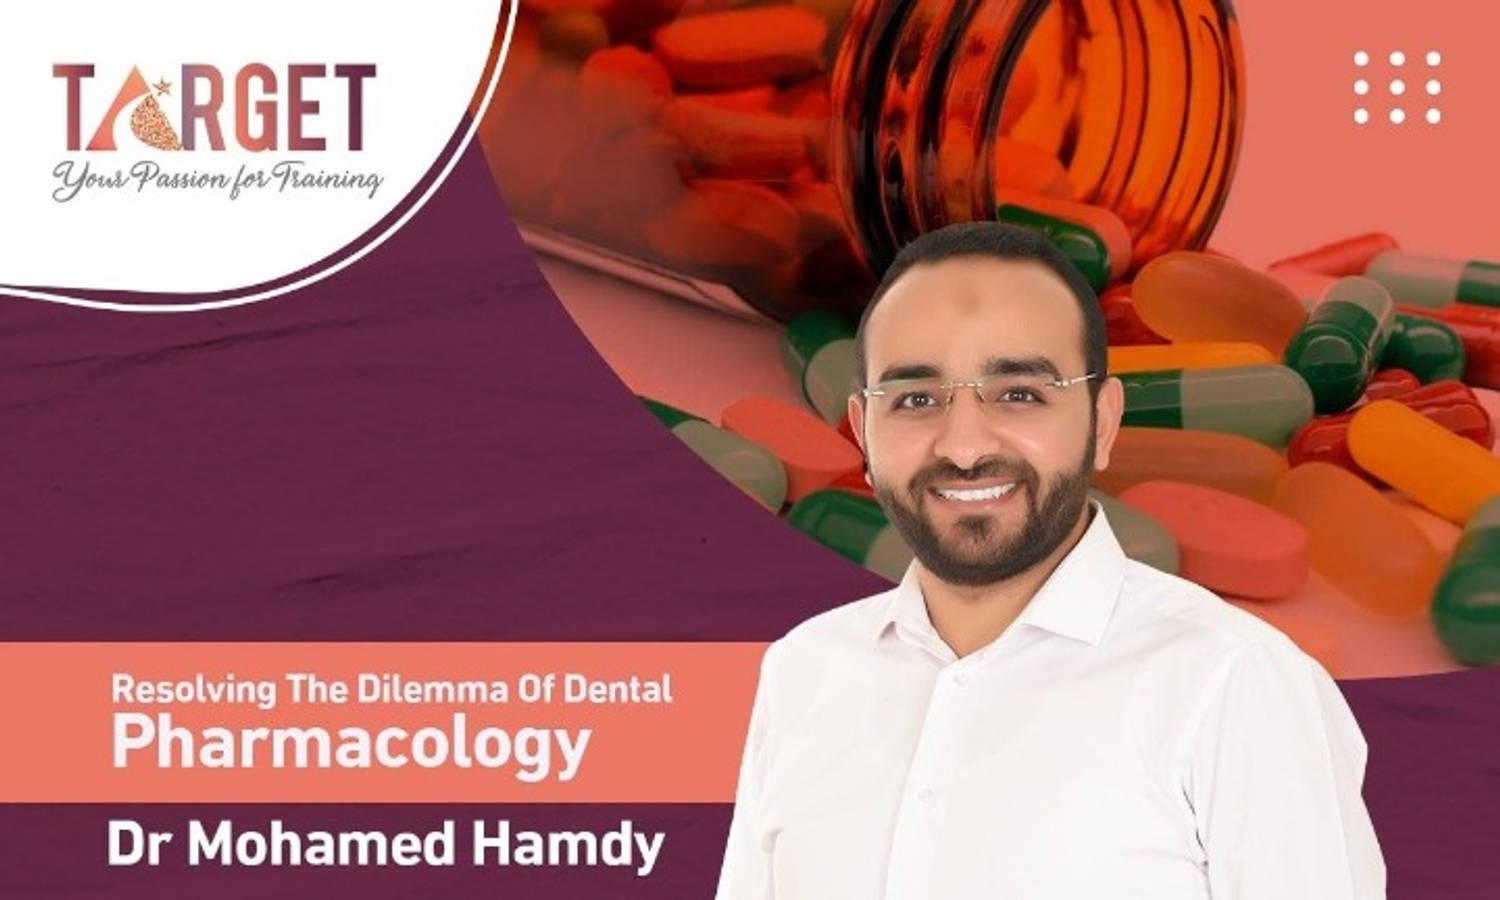 Resolving The Dilemma of Dental Pharmacology